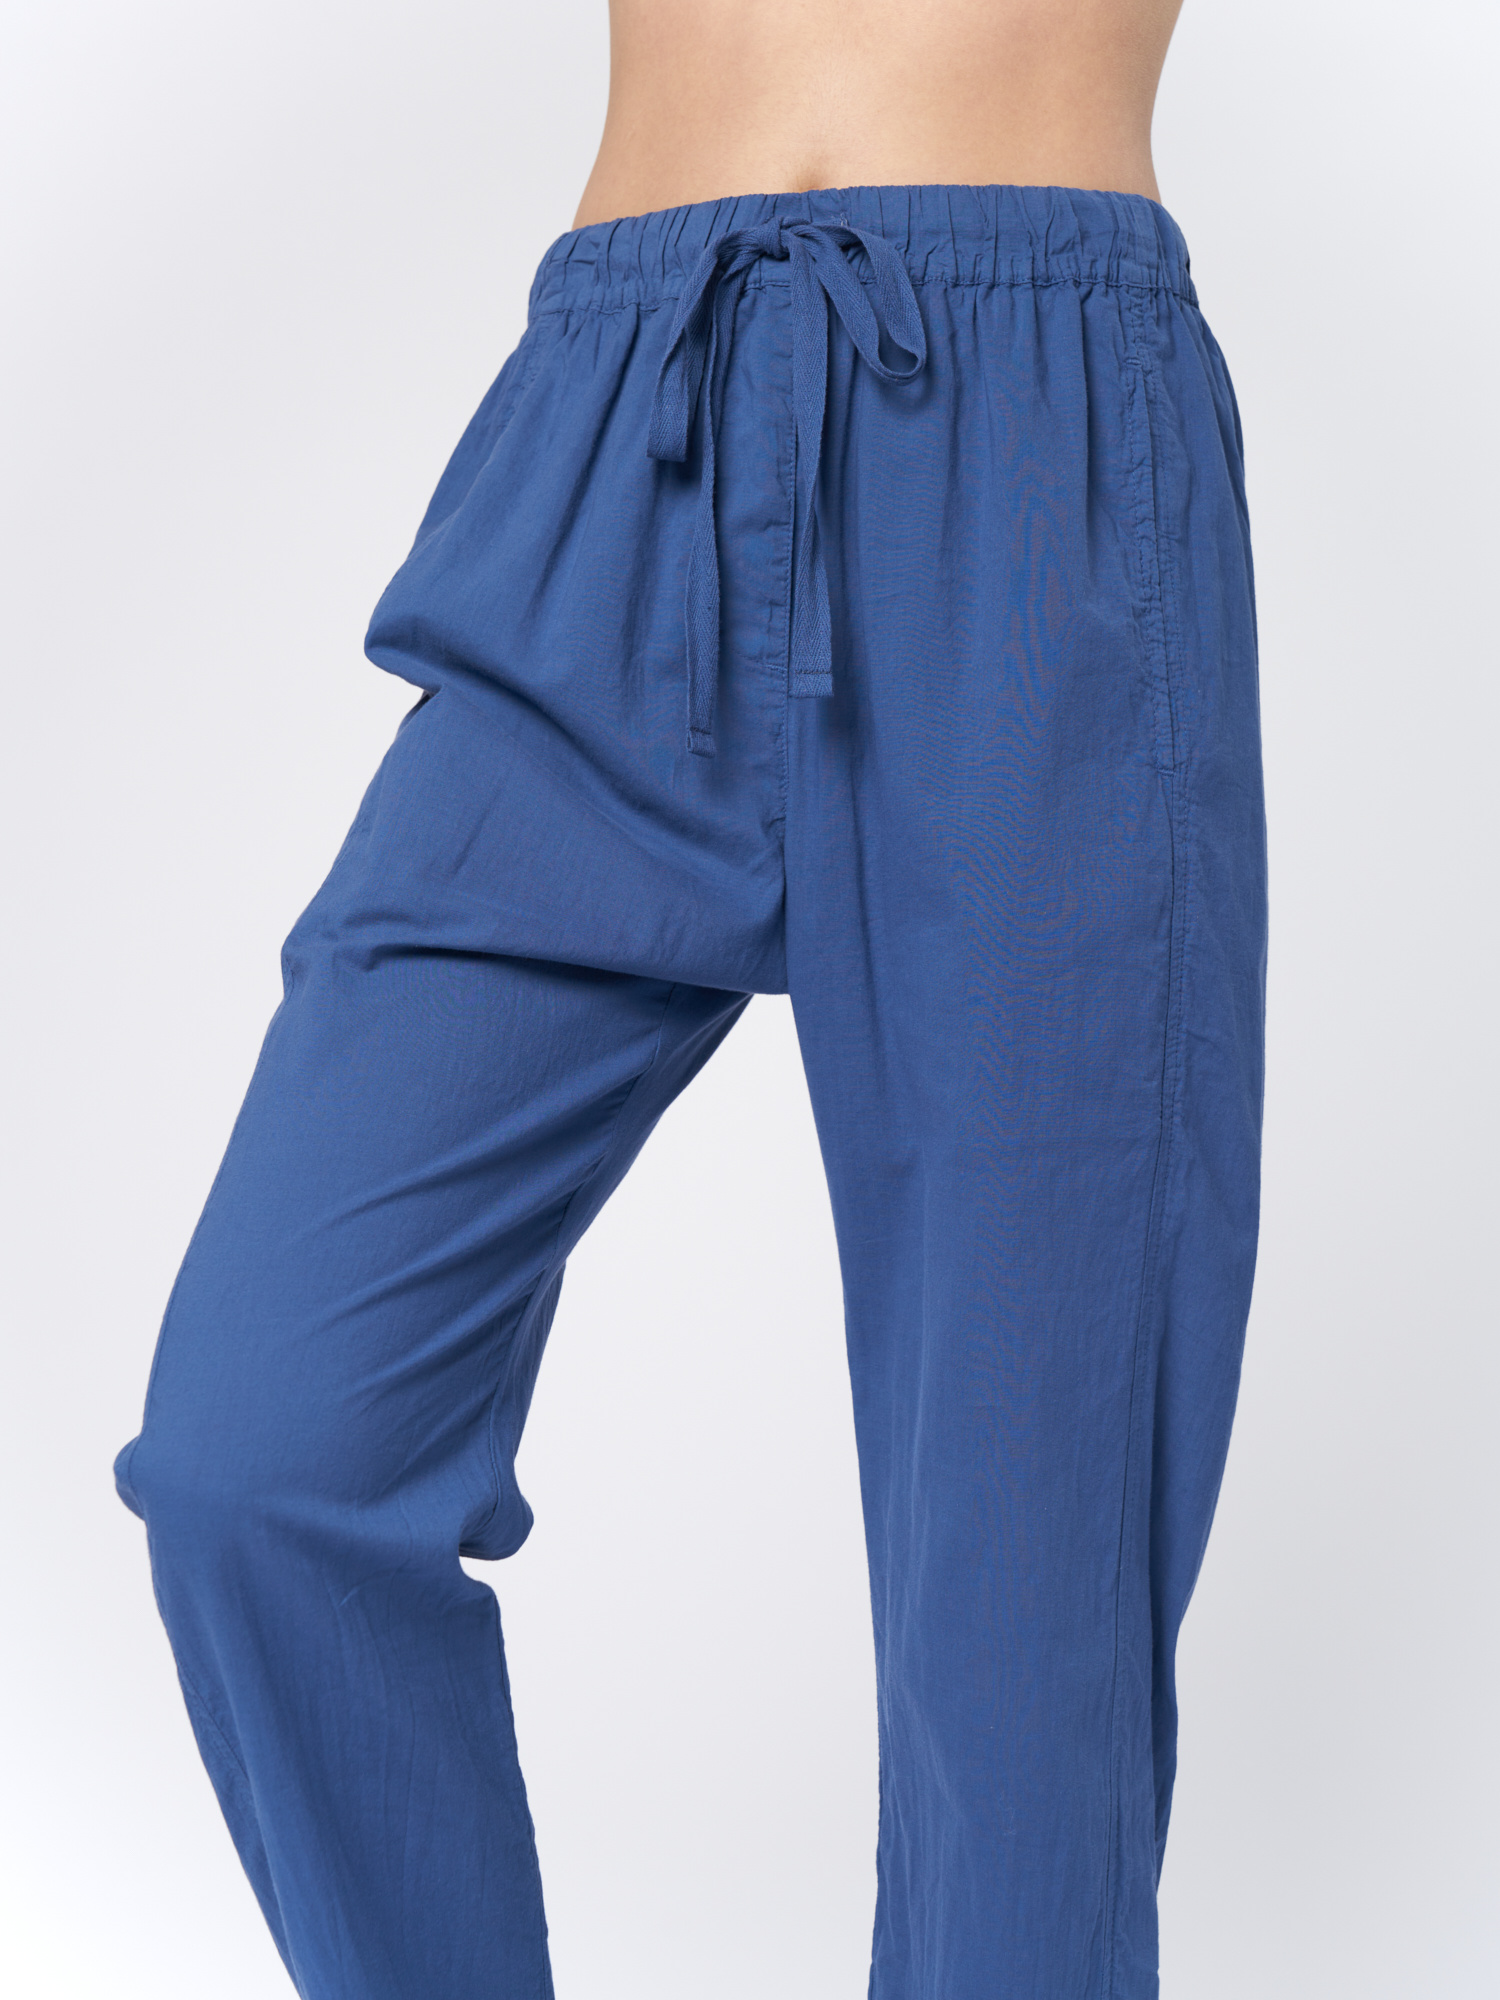 Draper Pant Blue Capri - Alhambra  Women's Clothing Boutique, Seattle